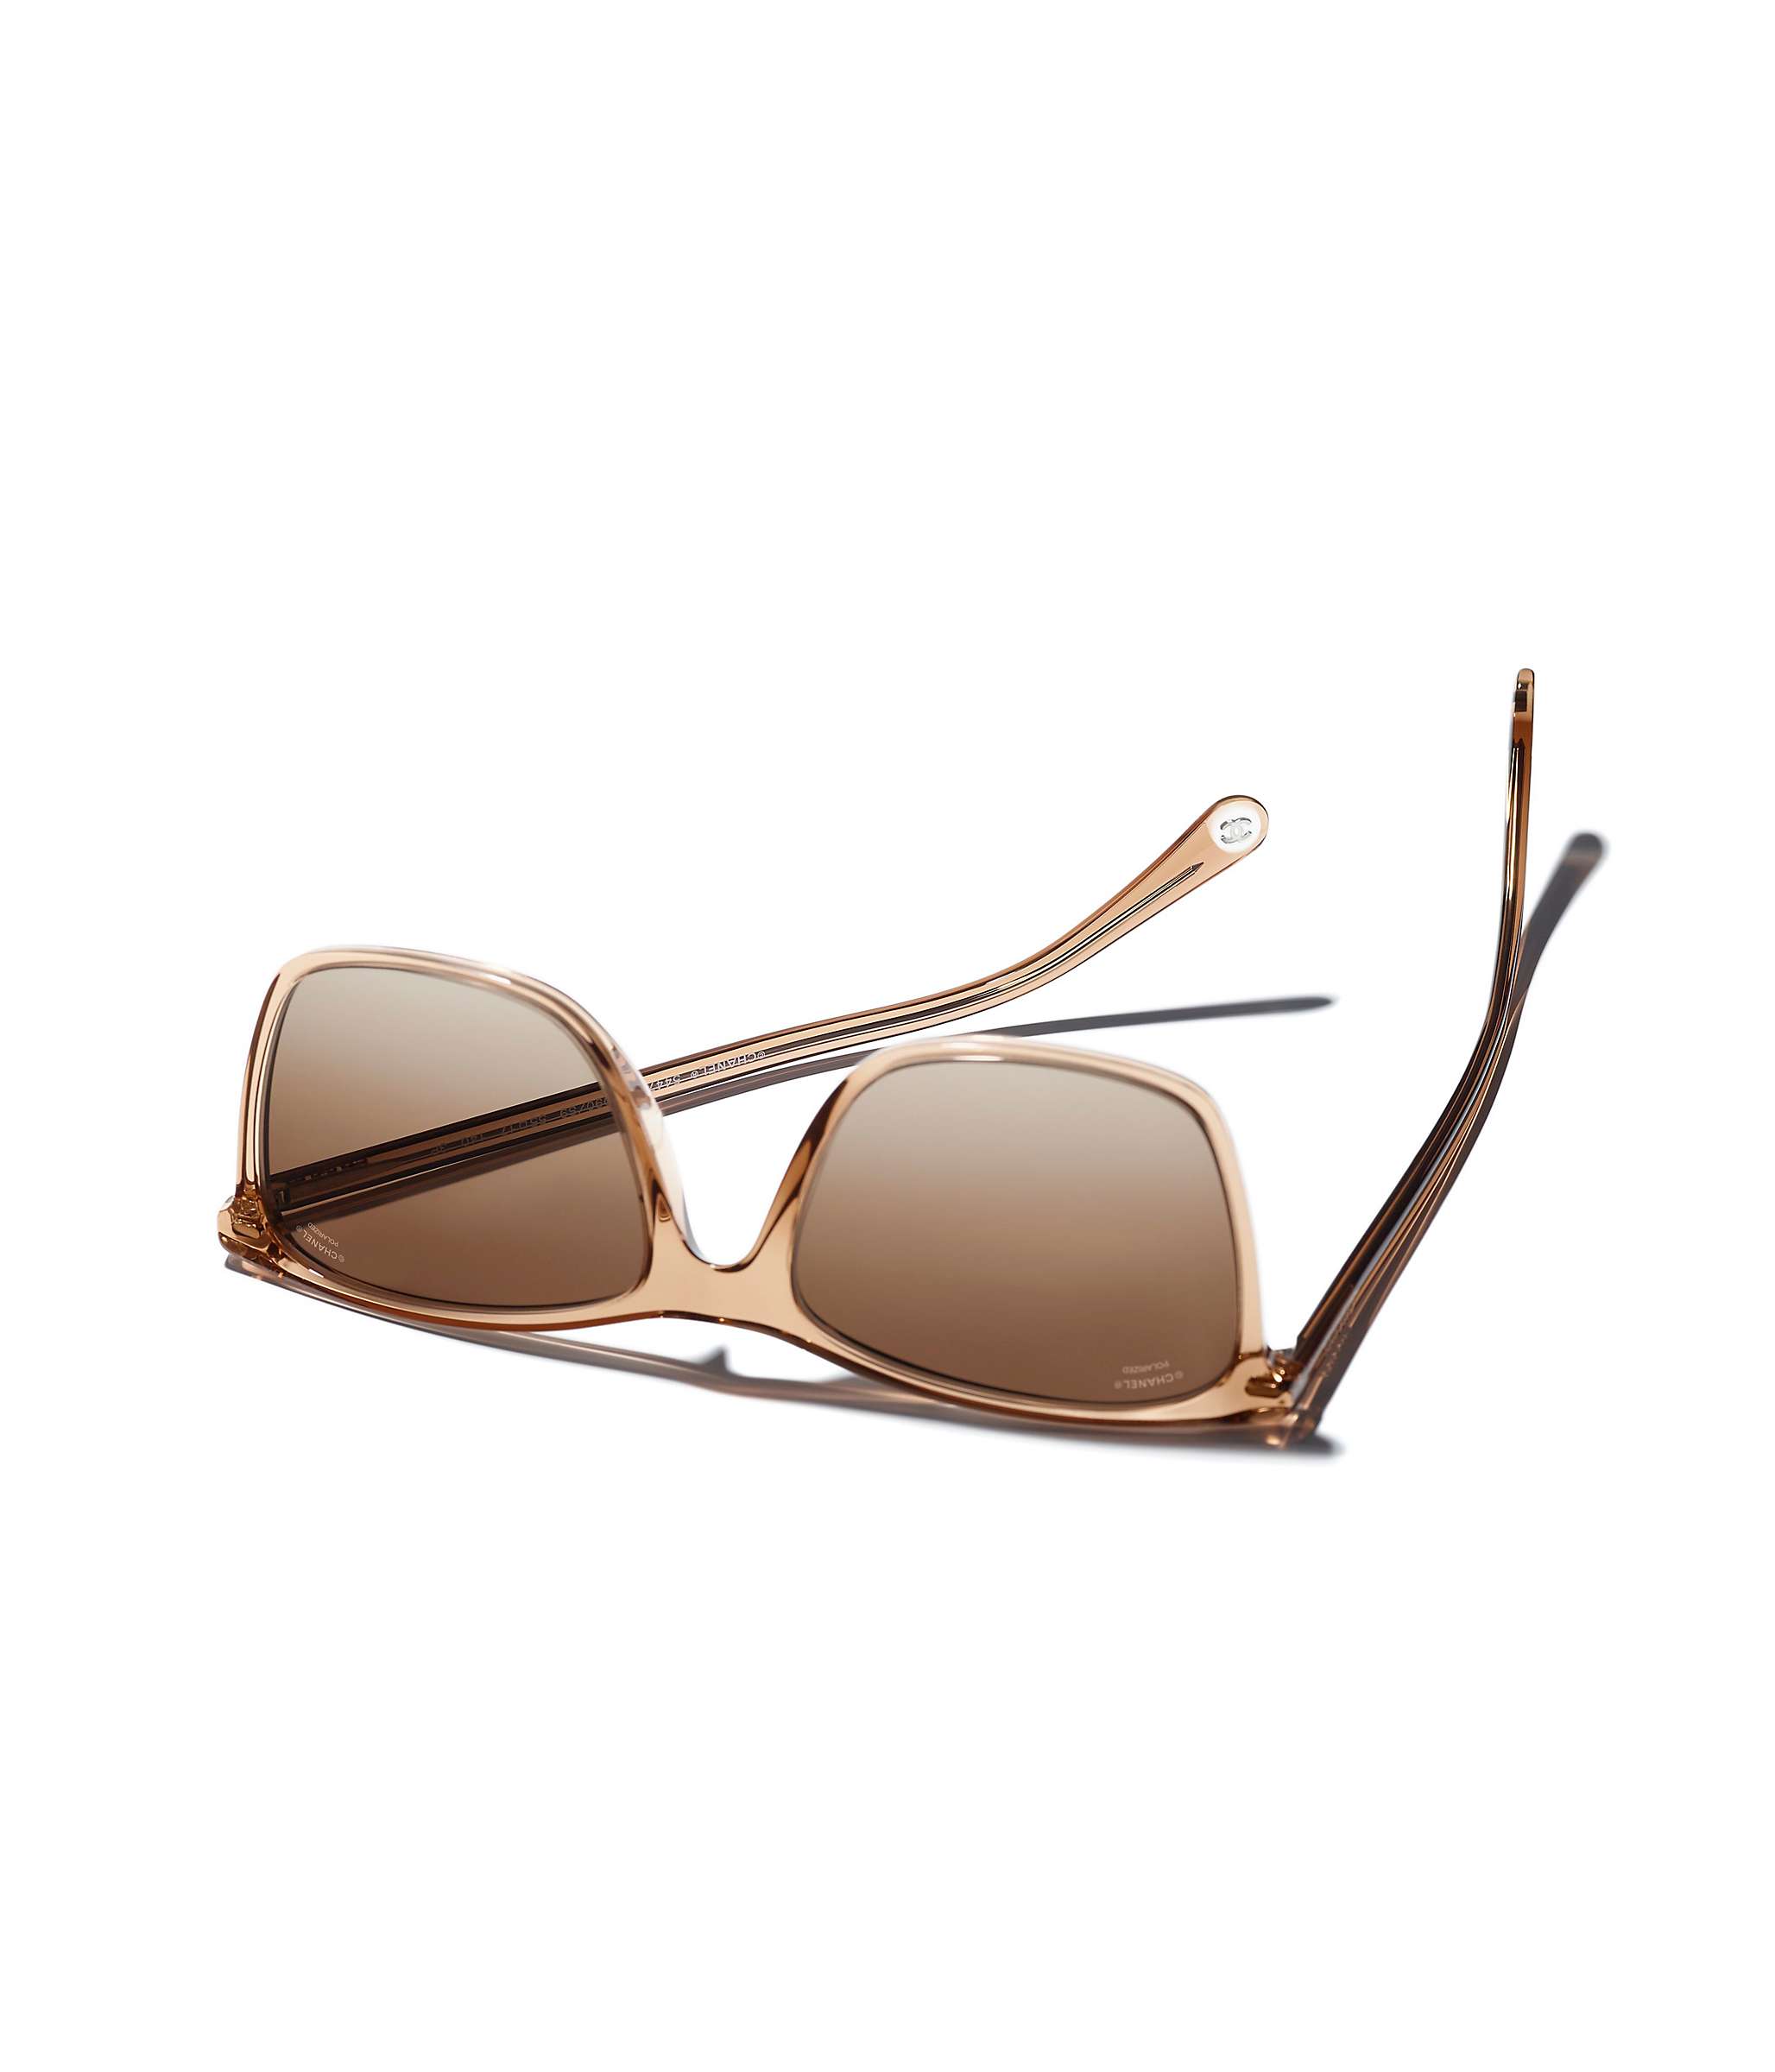 Buy CHANEL Rectangular Sunglasses CH5447 Light Brown/Brown Gradient Online at johnlewis.com